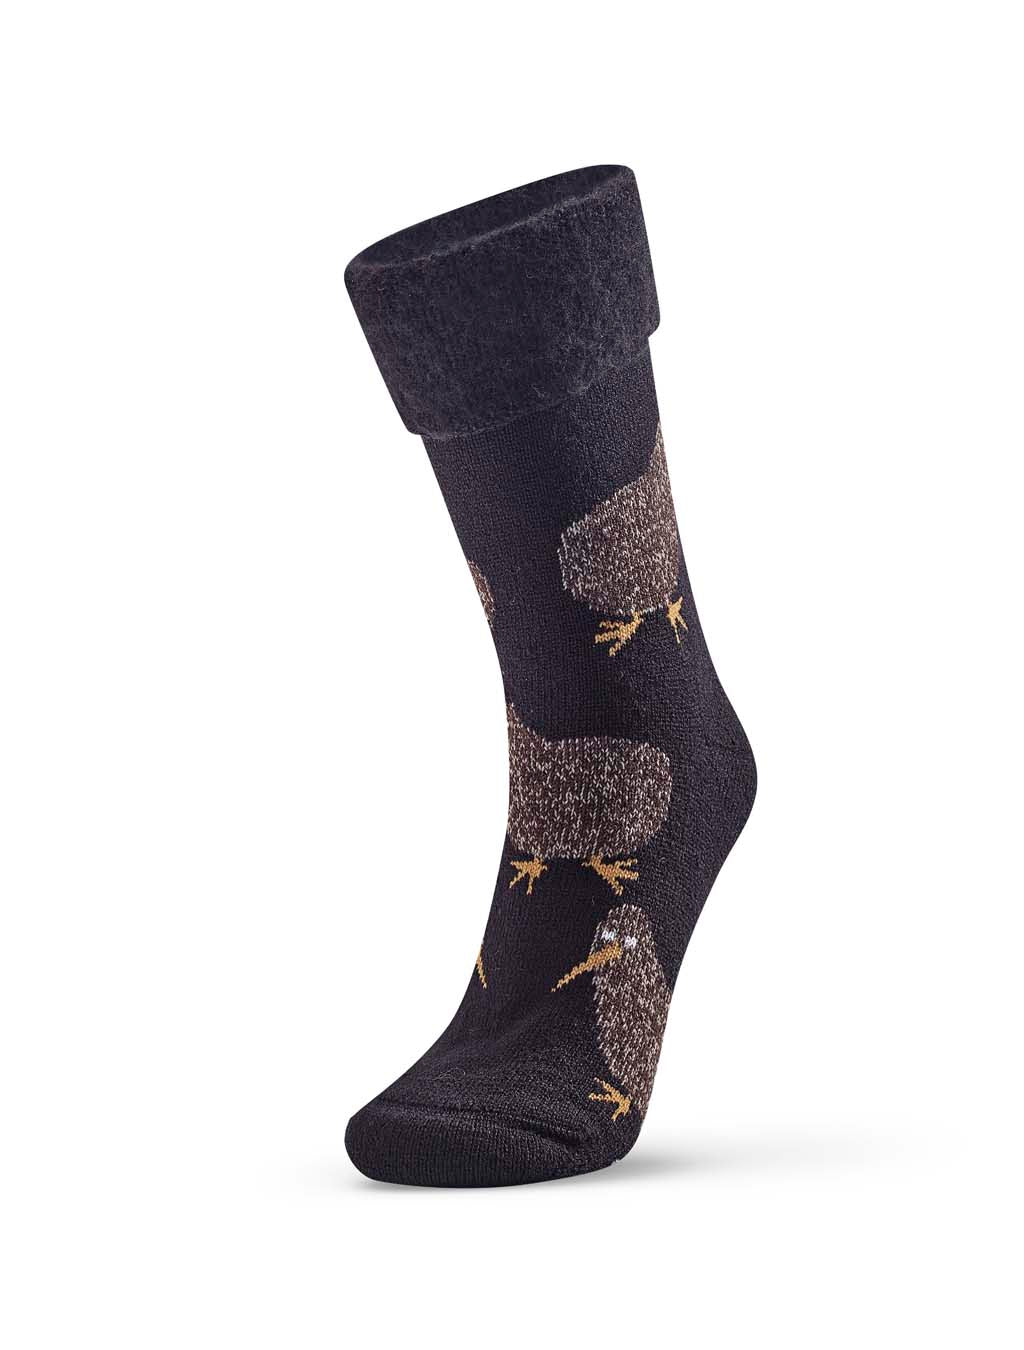 Kiwi Bed Socks - Black